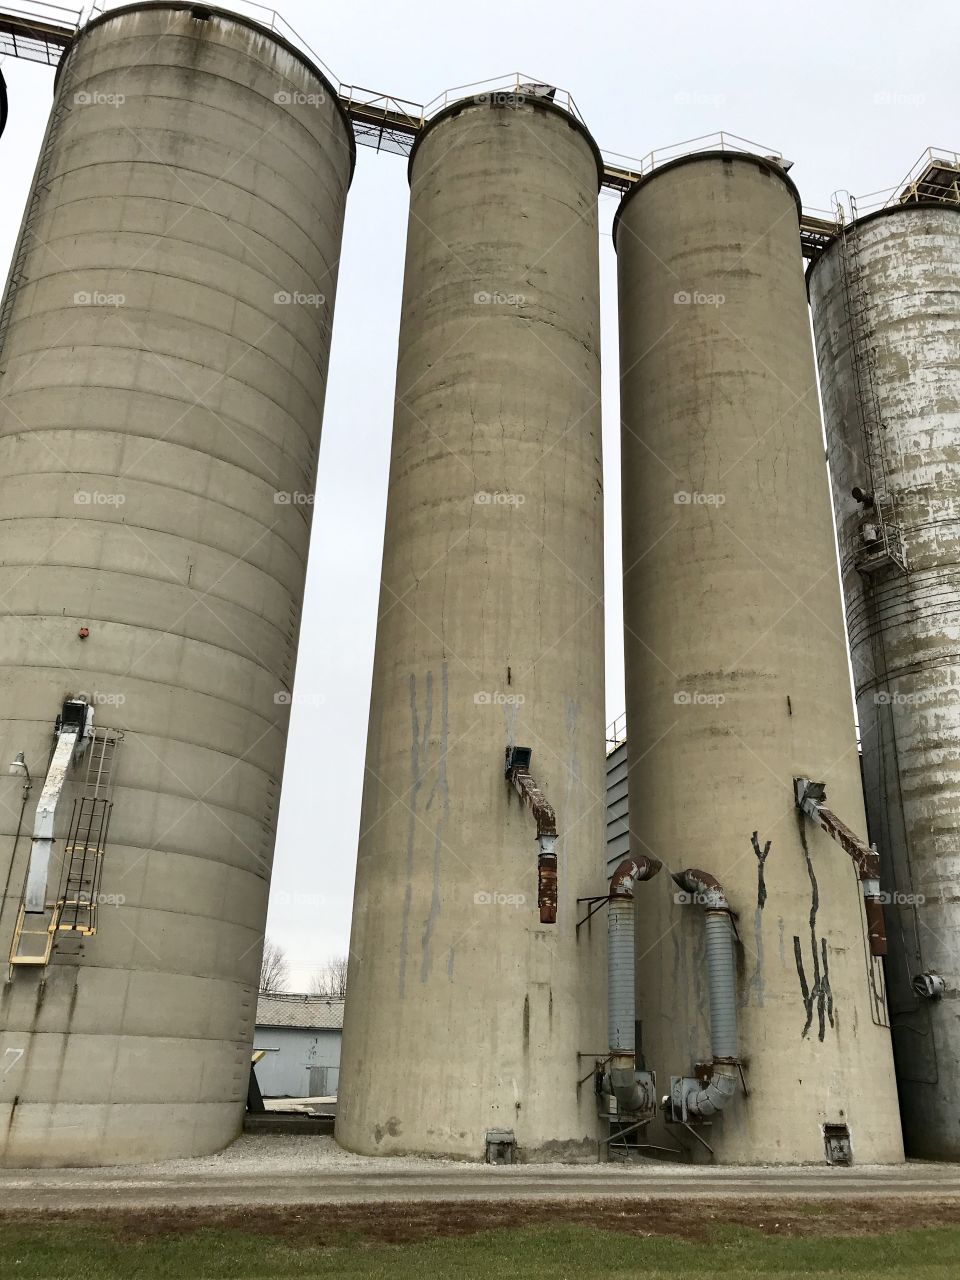 Tall Farm grain silos in rural town of Jenera Ohio 